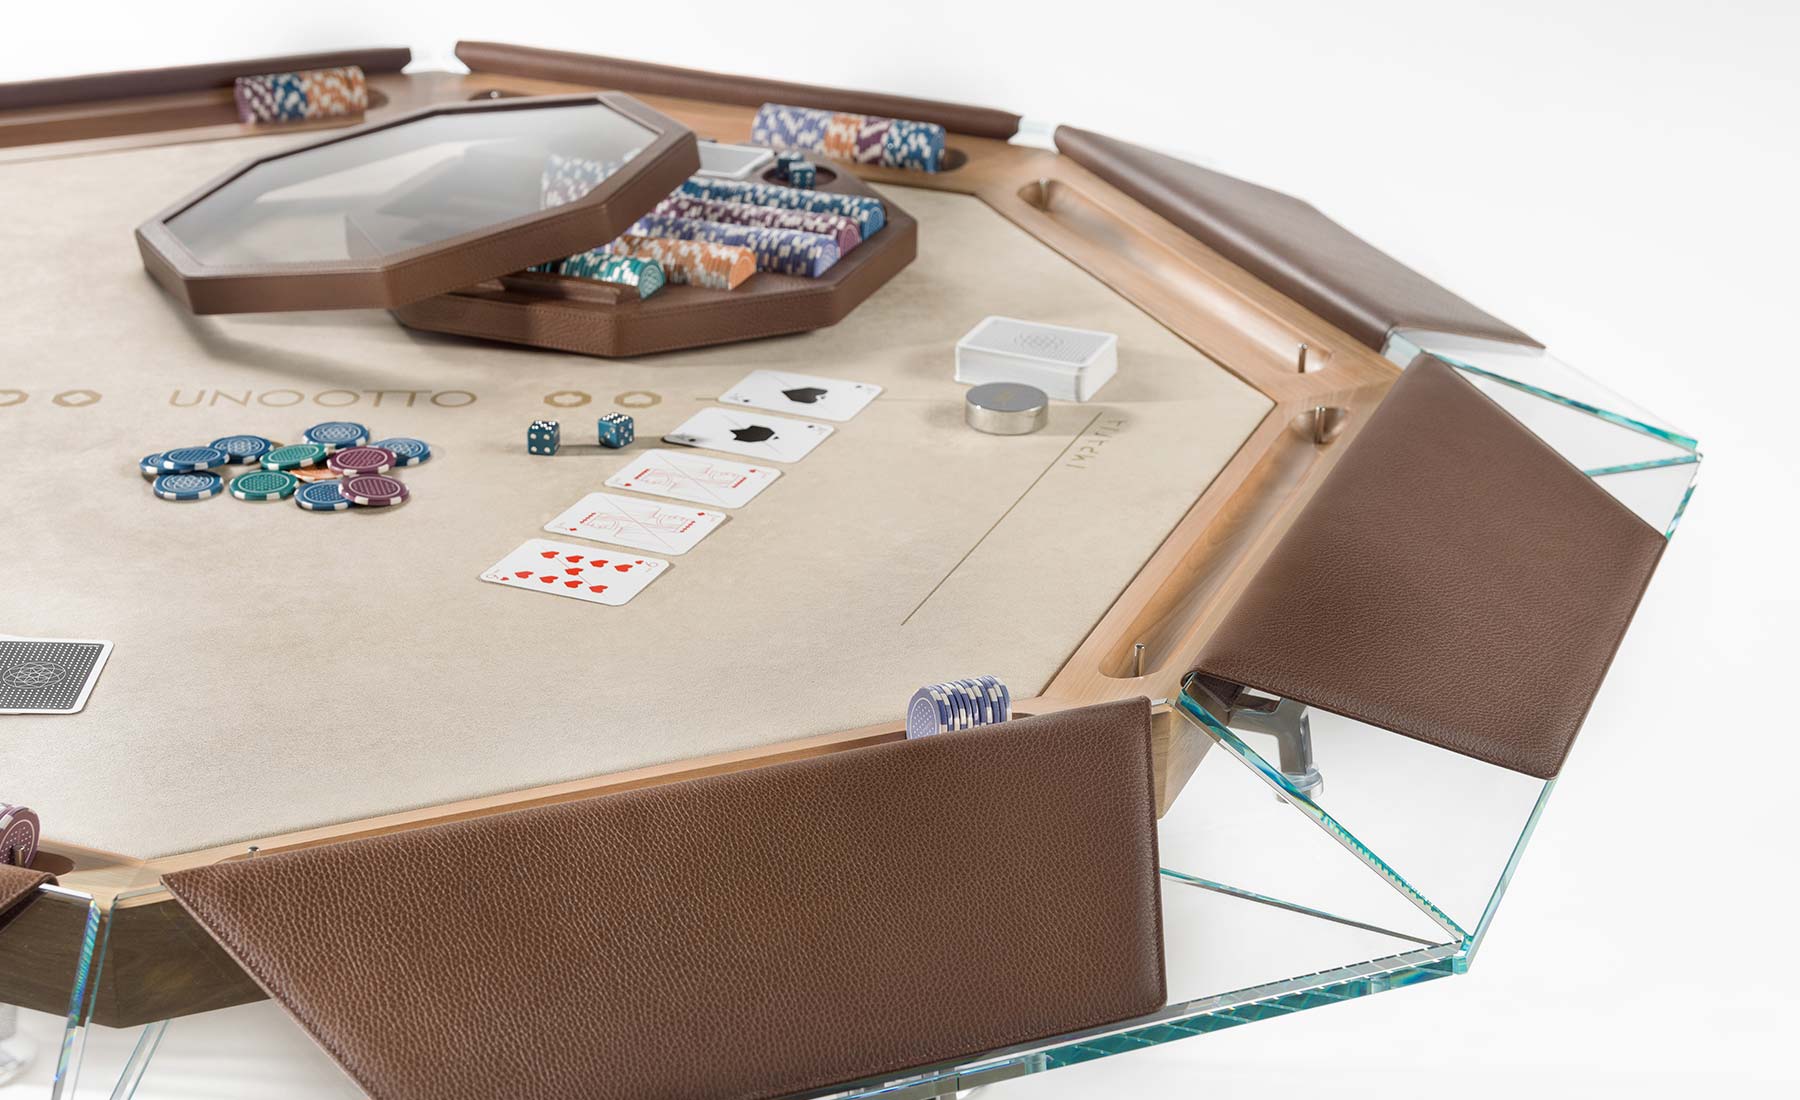 Unootto Cystal Poker Table - Blatt Billiards